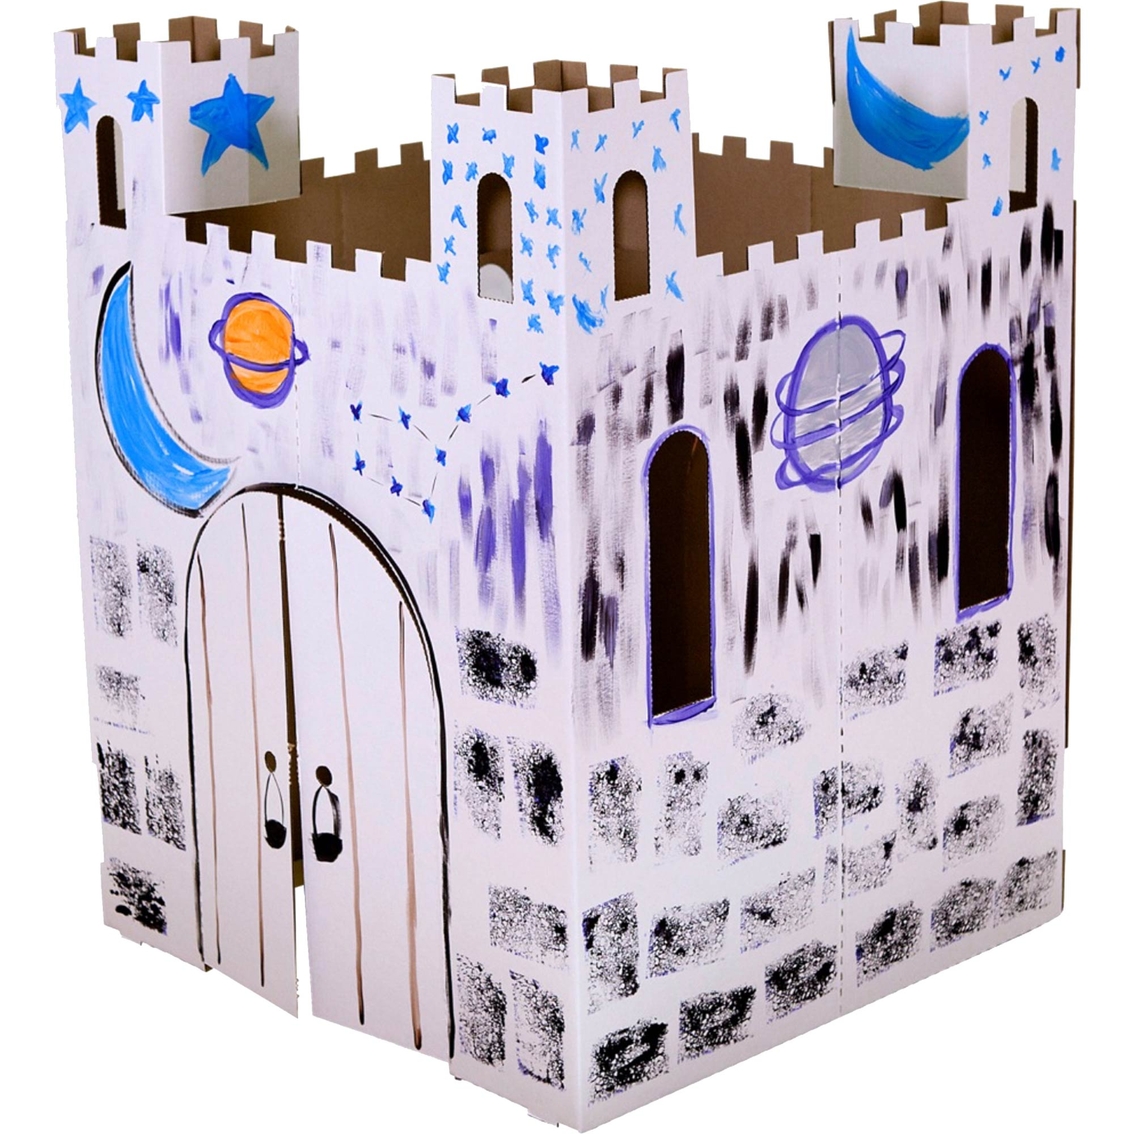 Easy Playhouse Castle Cardboard Playhouse - Image 2 of 3